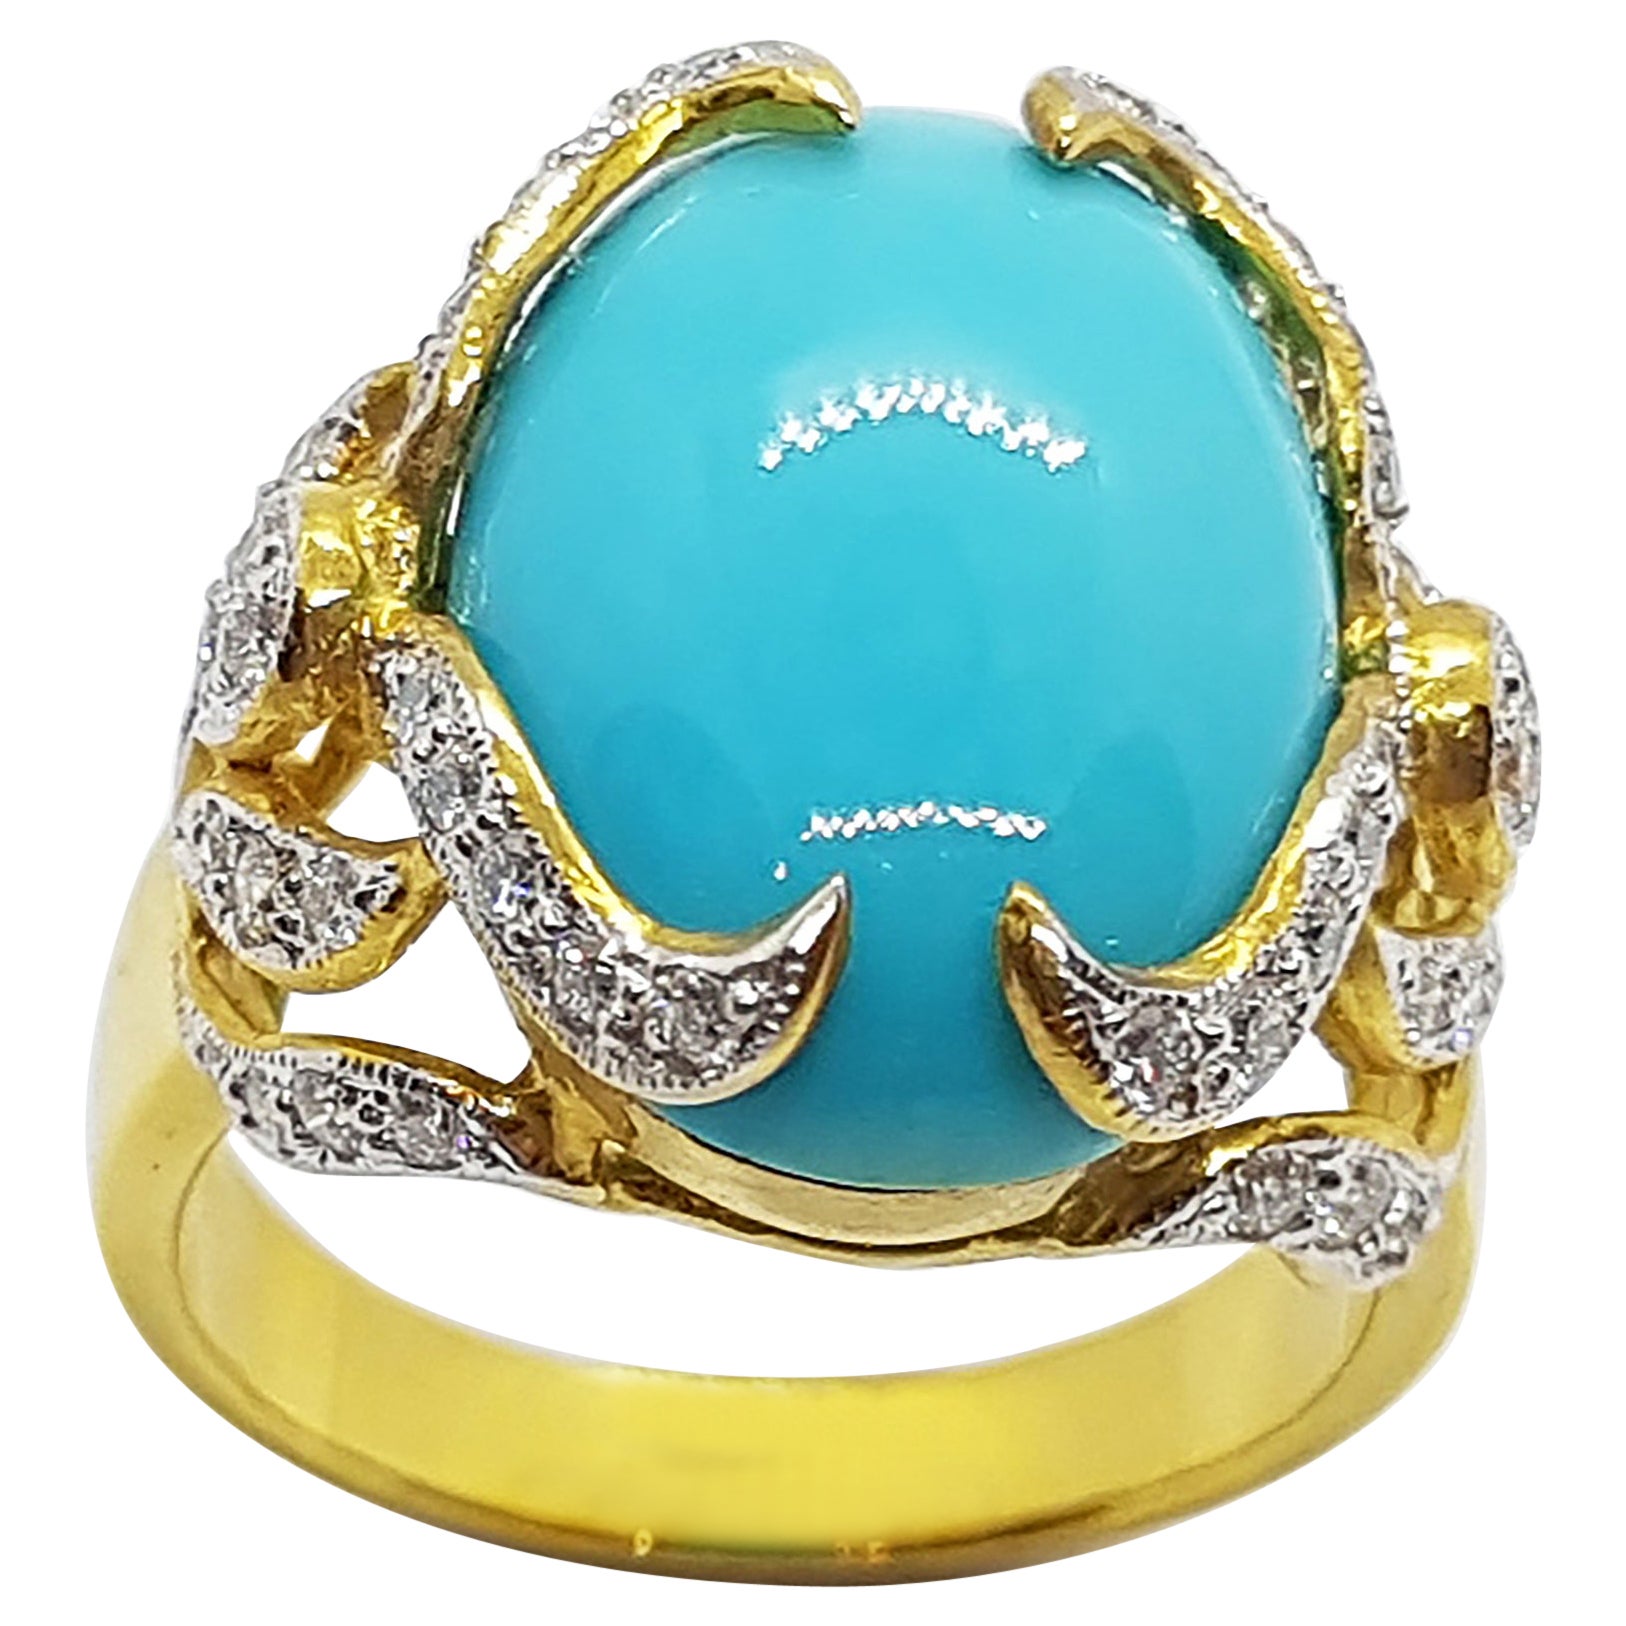 Turquoise with Diamond Ring Set in 18 Karat Gold Settings